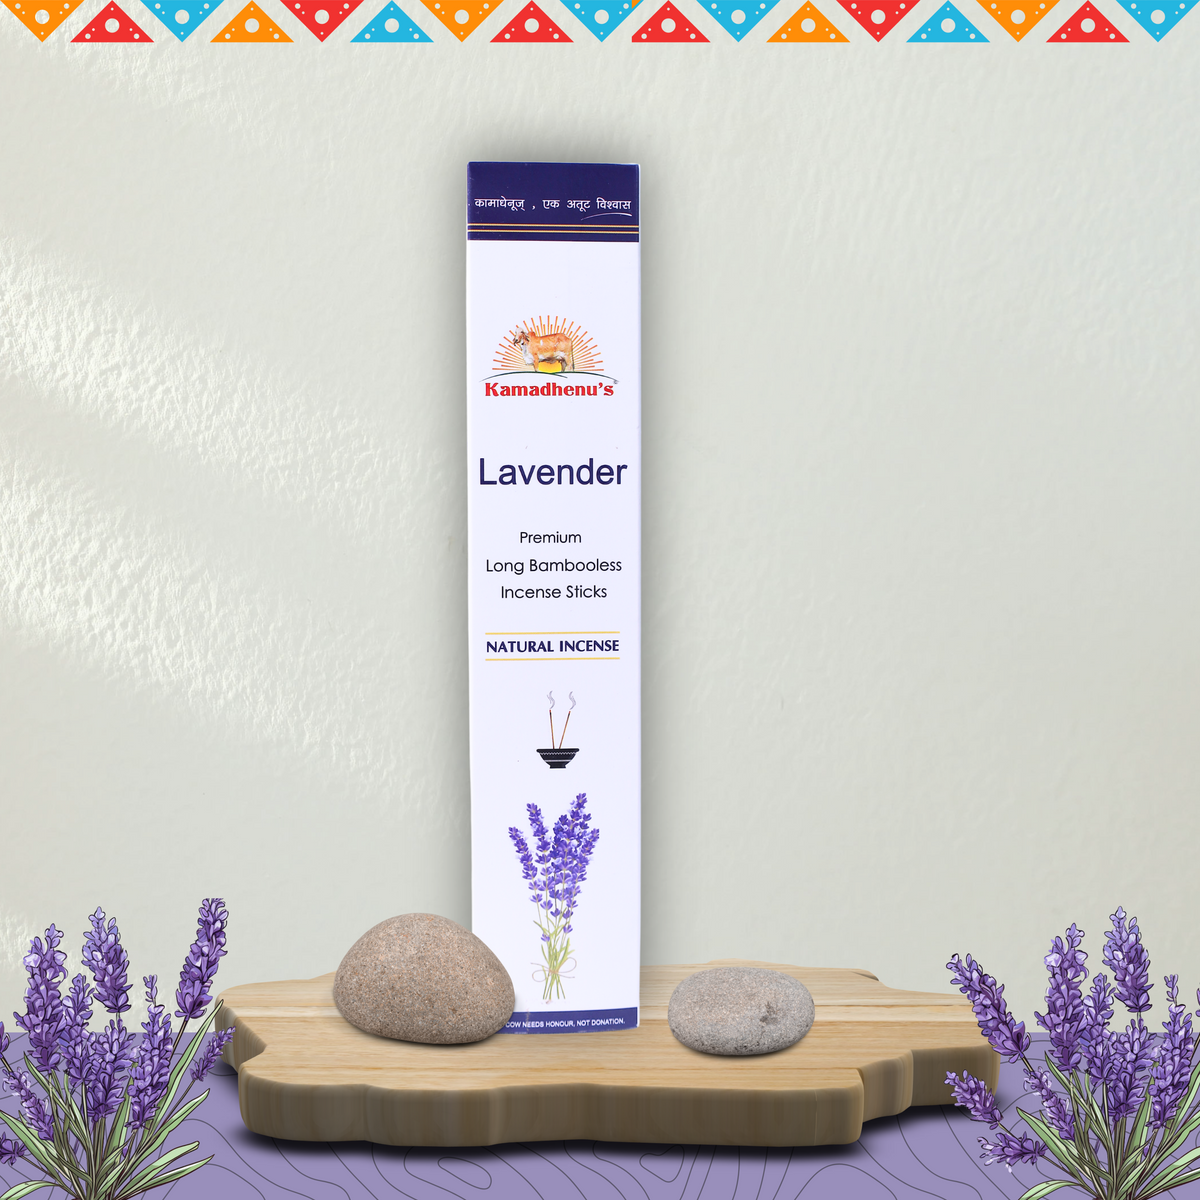 Kamadhenu's Lavender Premium Long Bambooless Incense Sticks